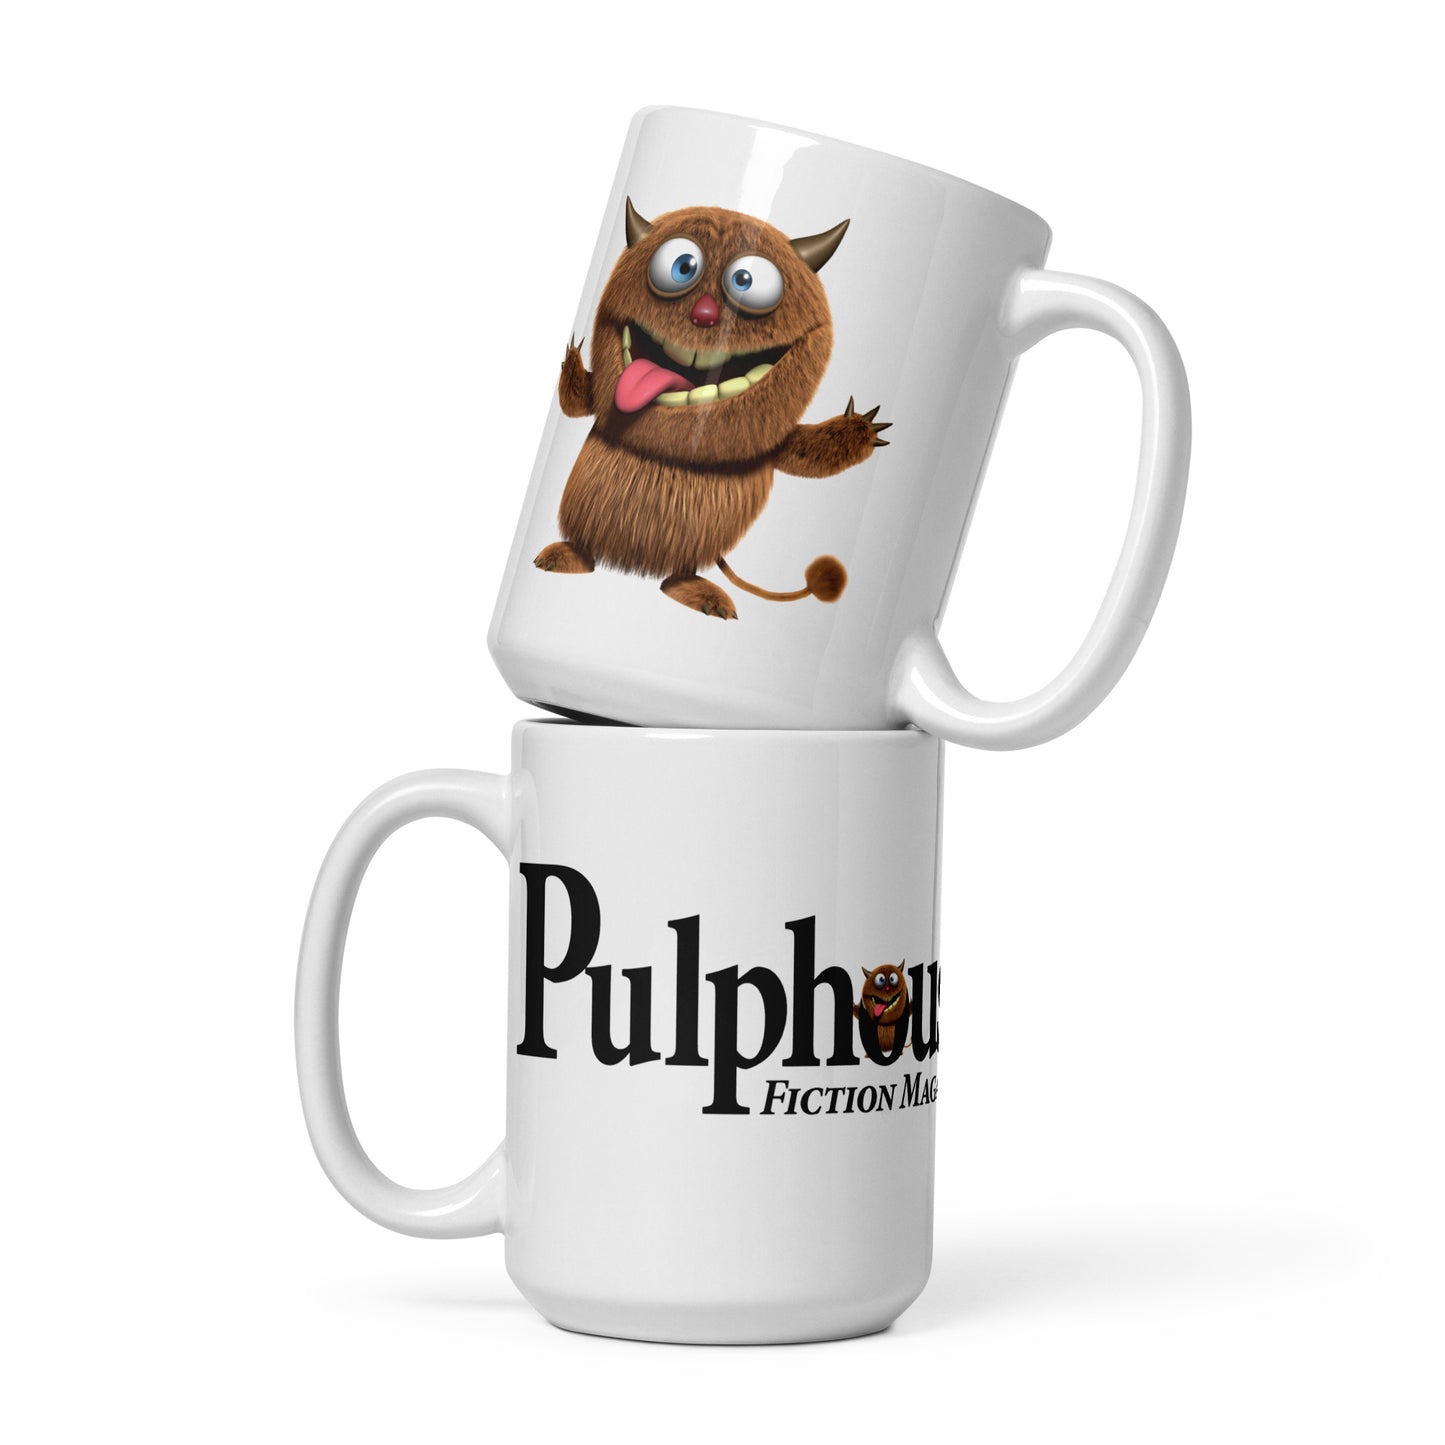 The Office Star! Thumper & Pulphouse Logo White Glossy Mug - Coffee Tea Mug Fun & Humorous